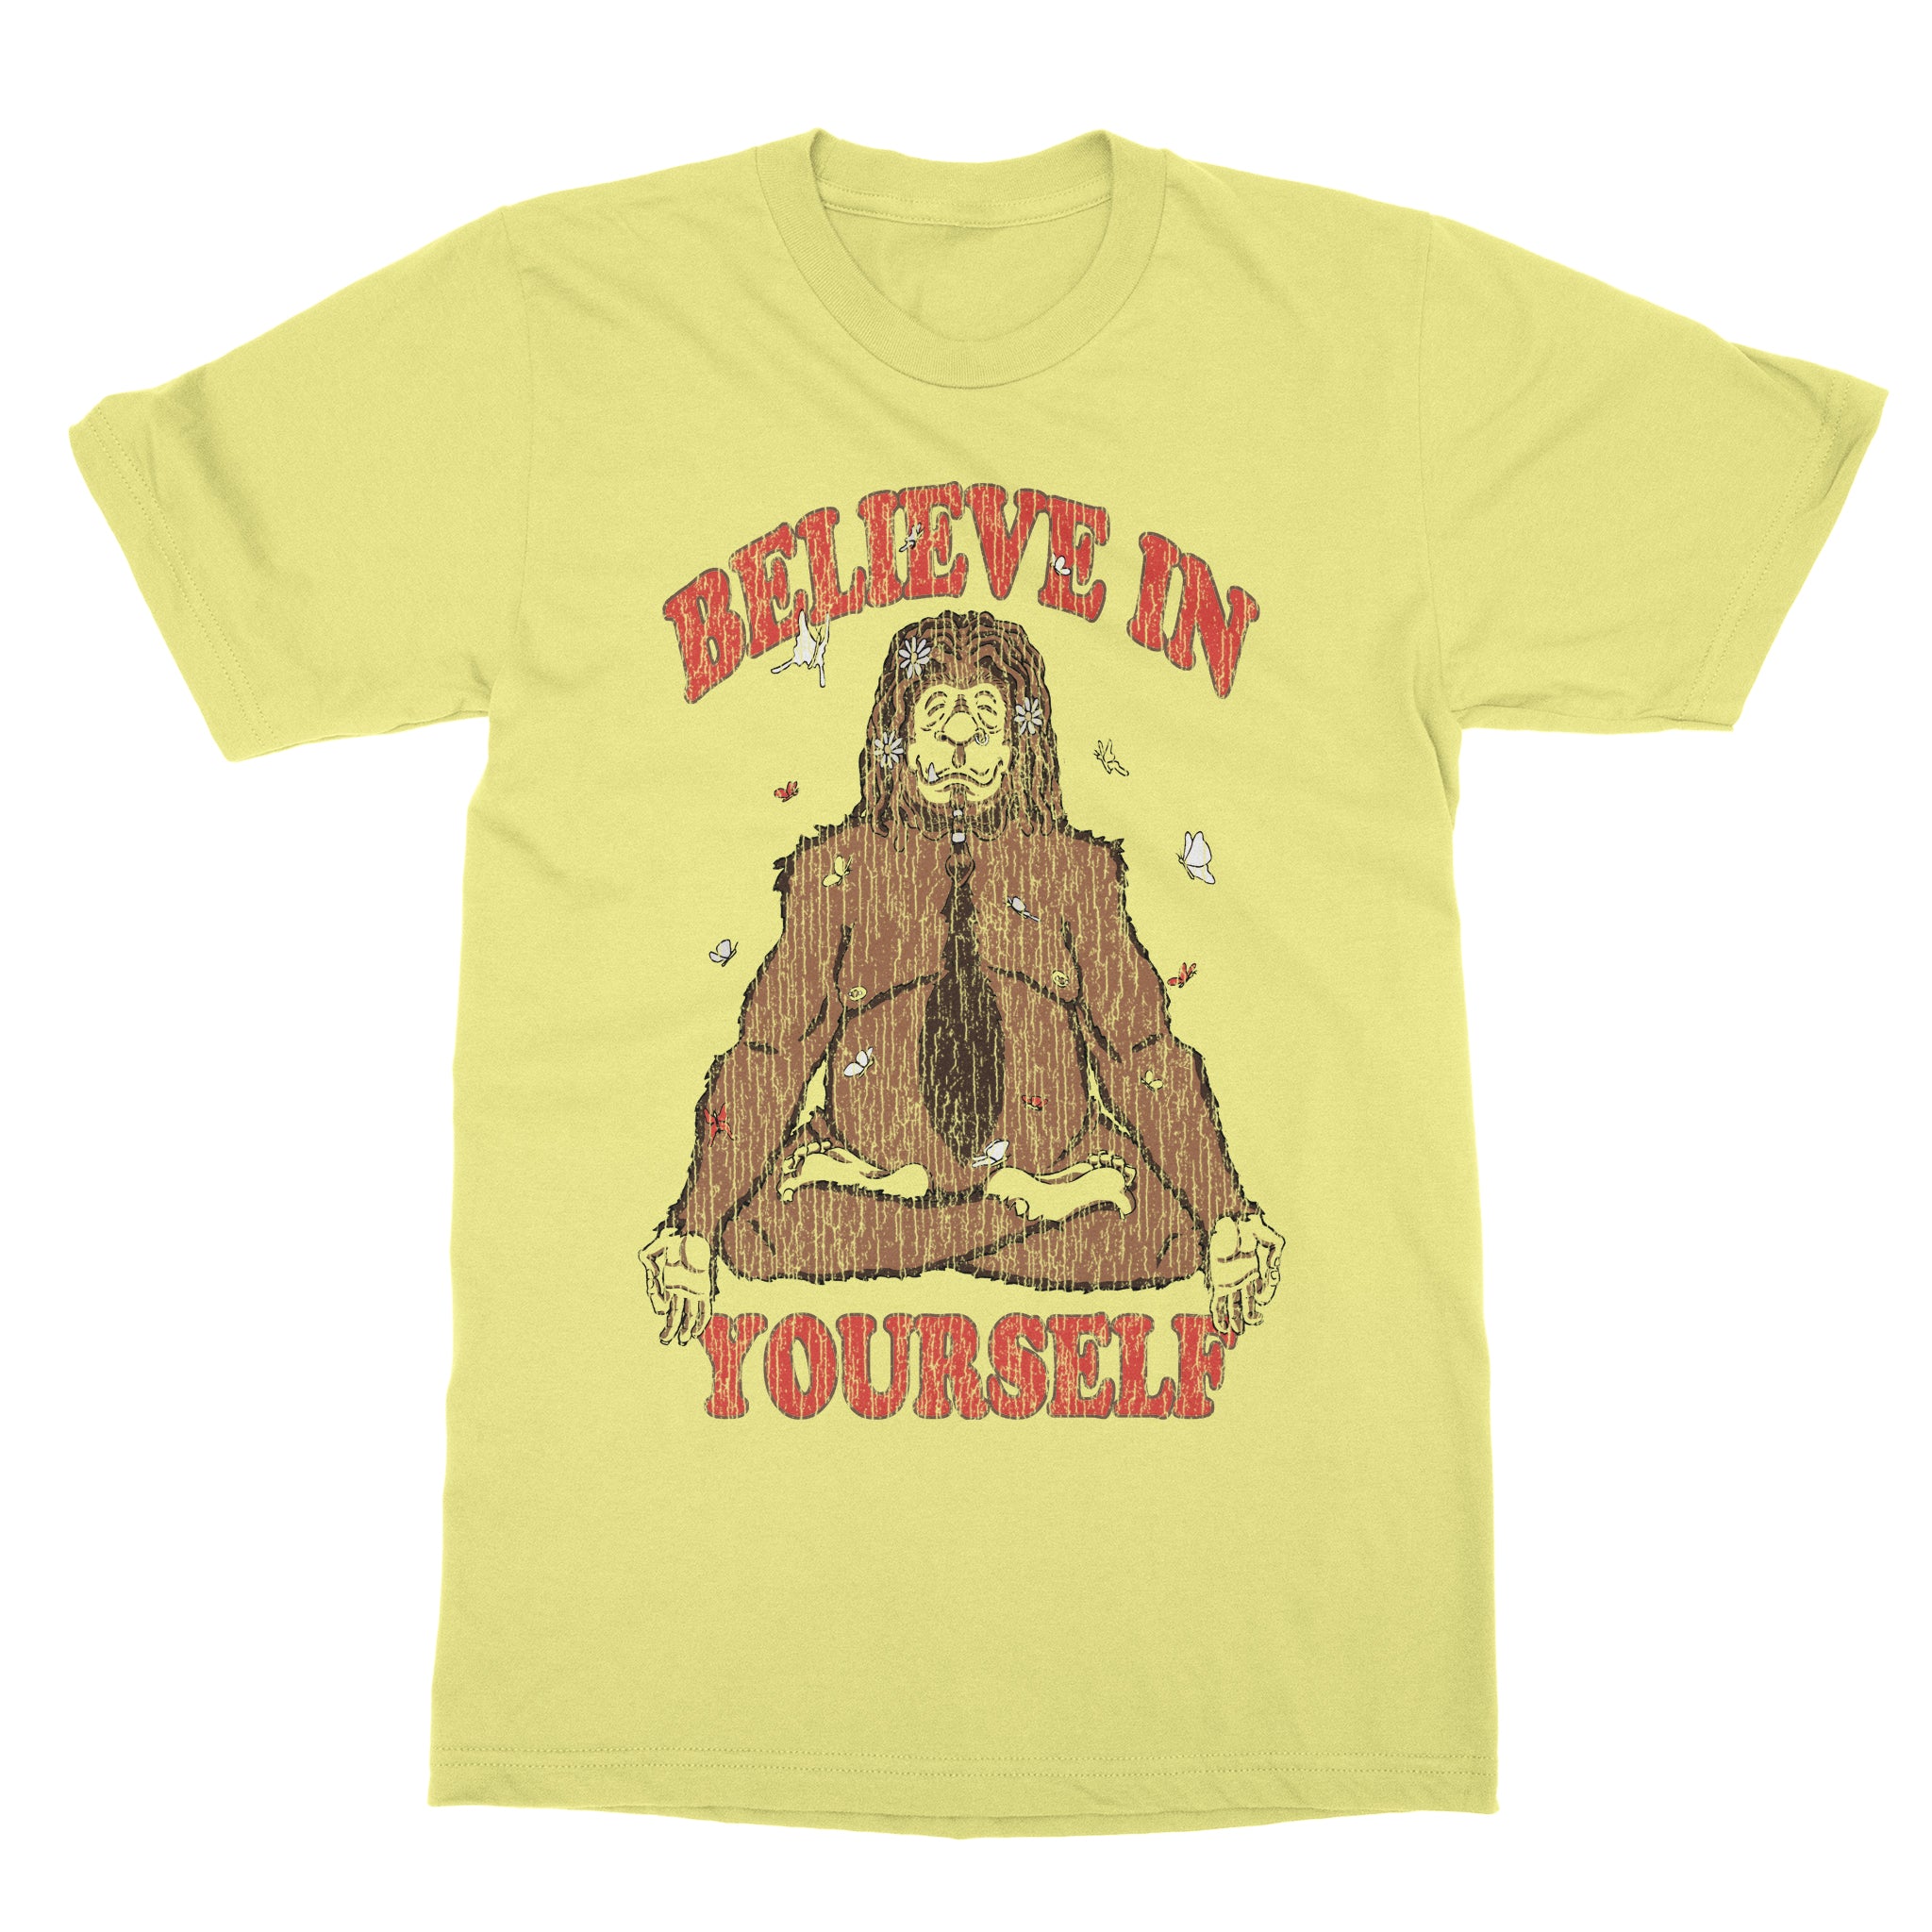 Believe In yourself  - Golden Maize Shirt